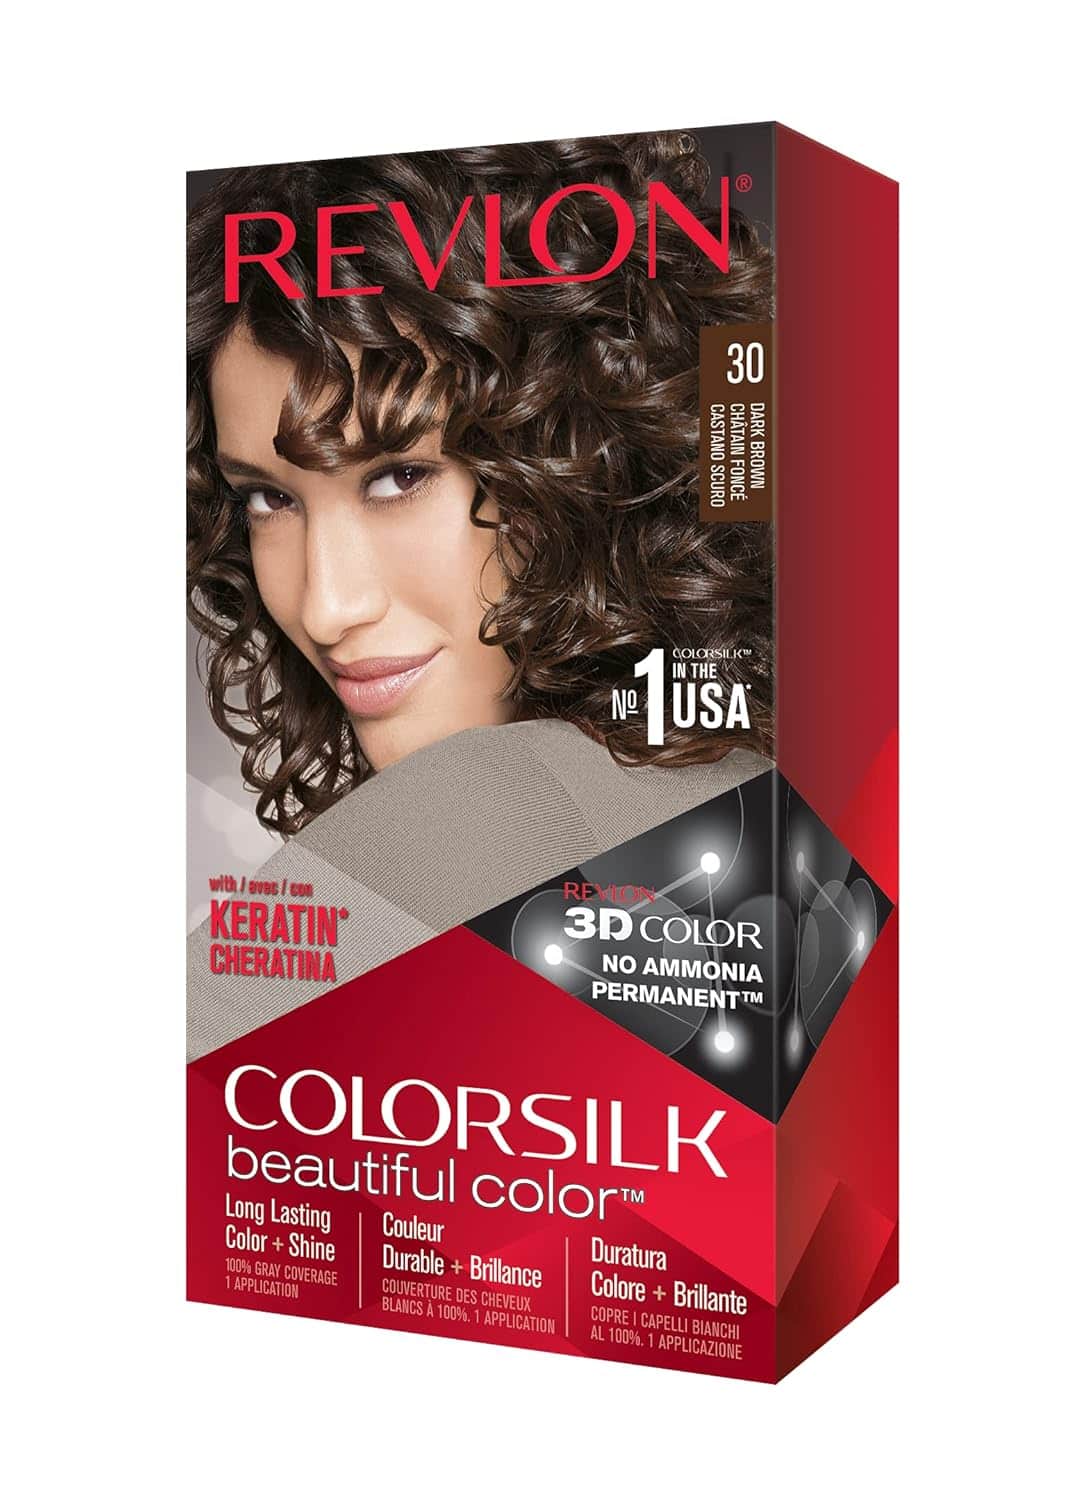 Revlon colorsilk Beautiful colour, Permanent Hair Dye with Keratin